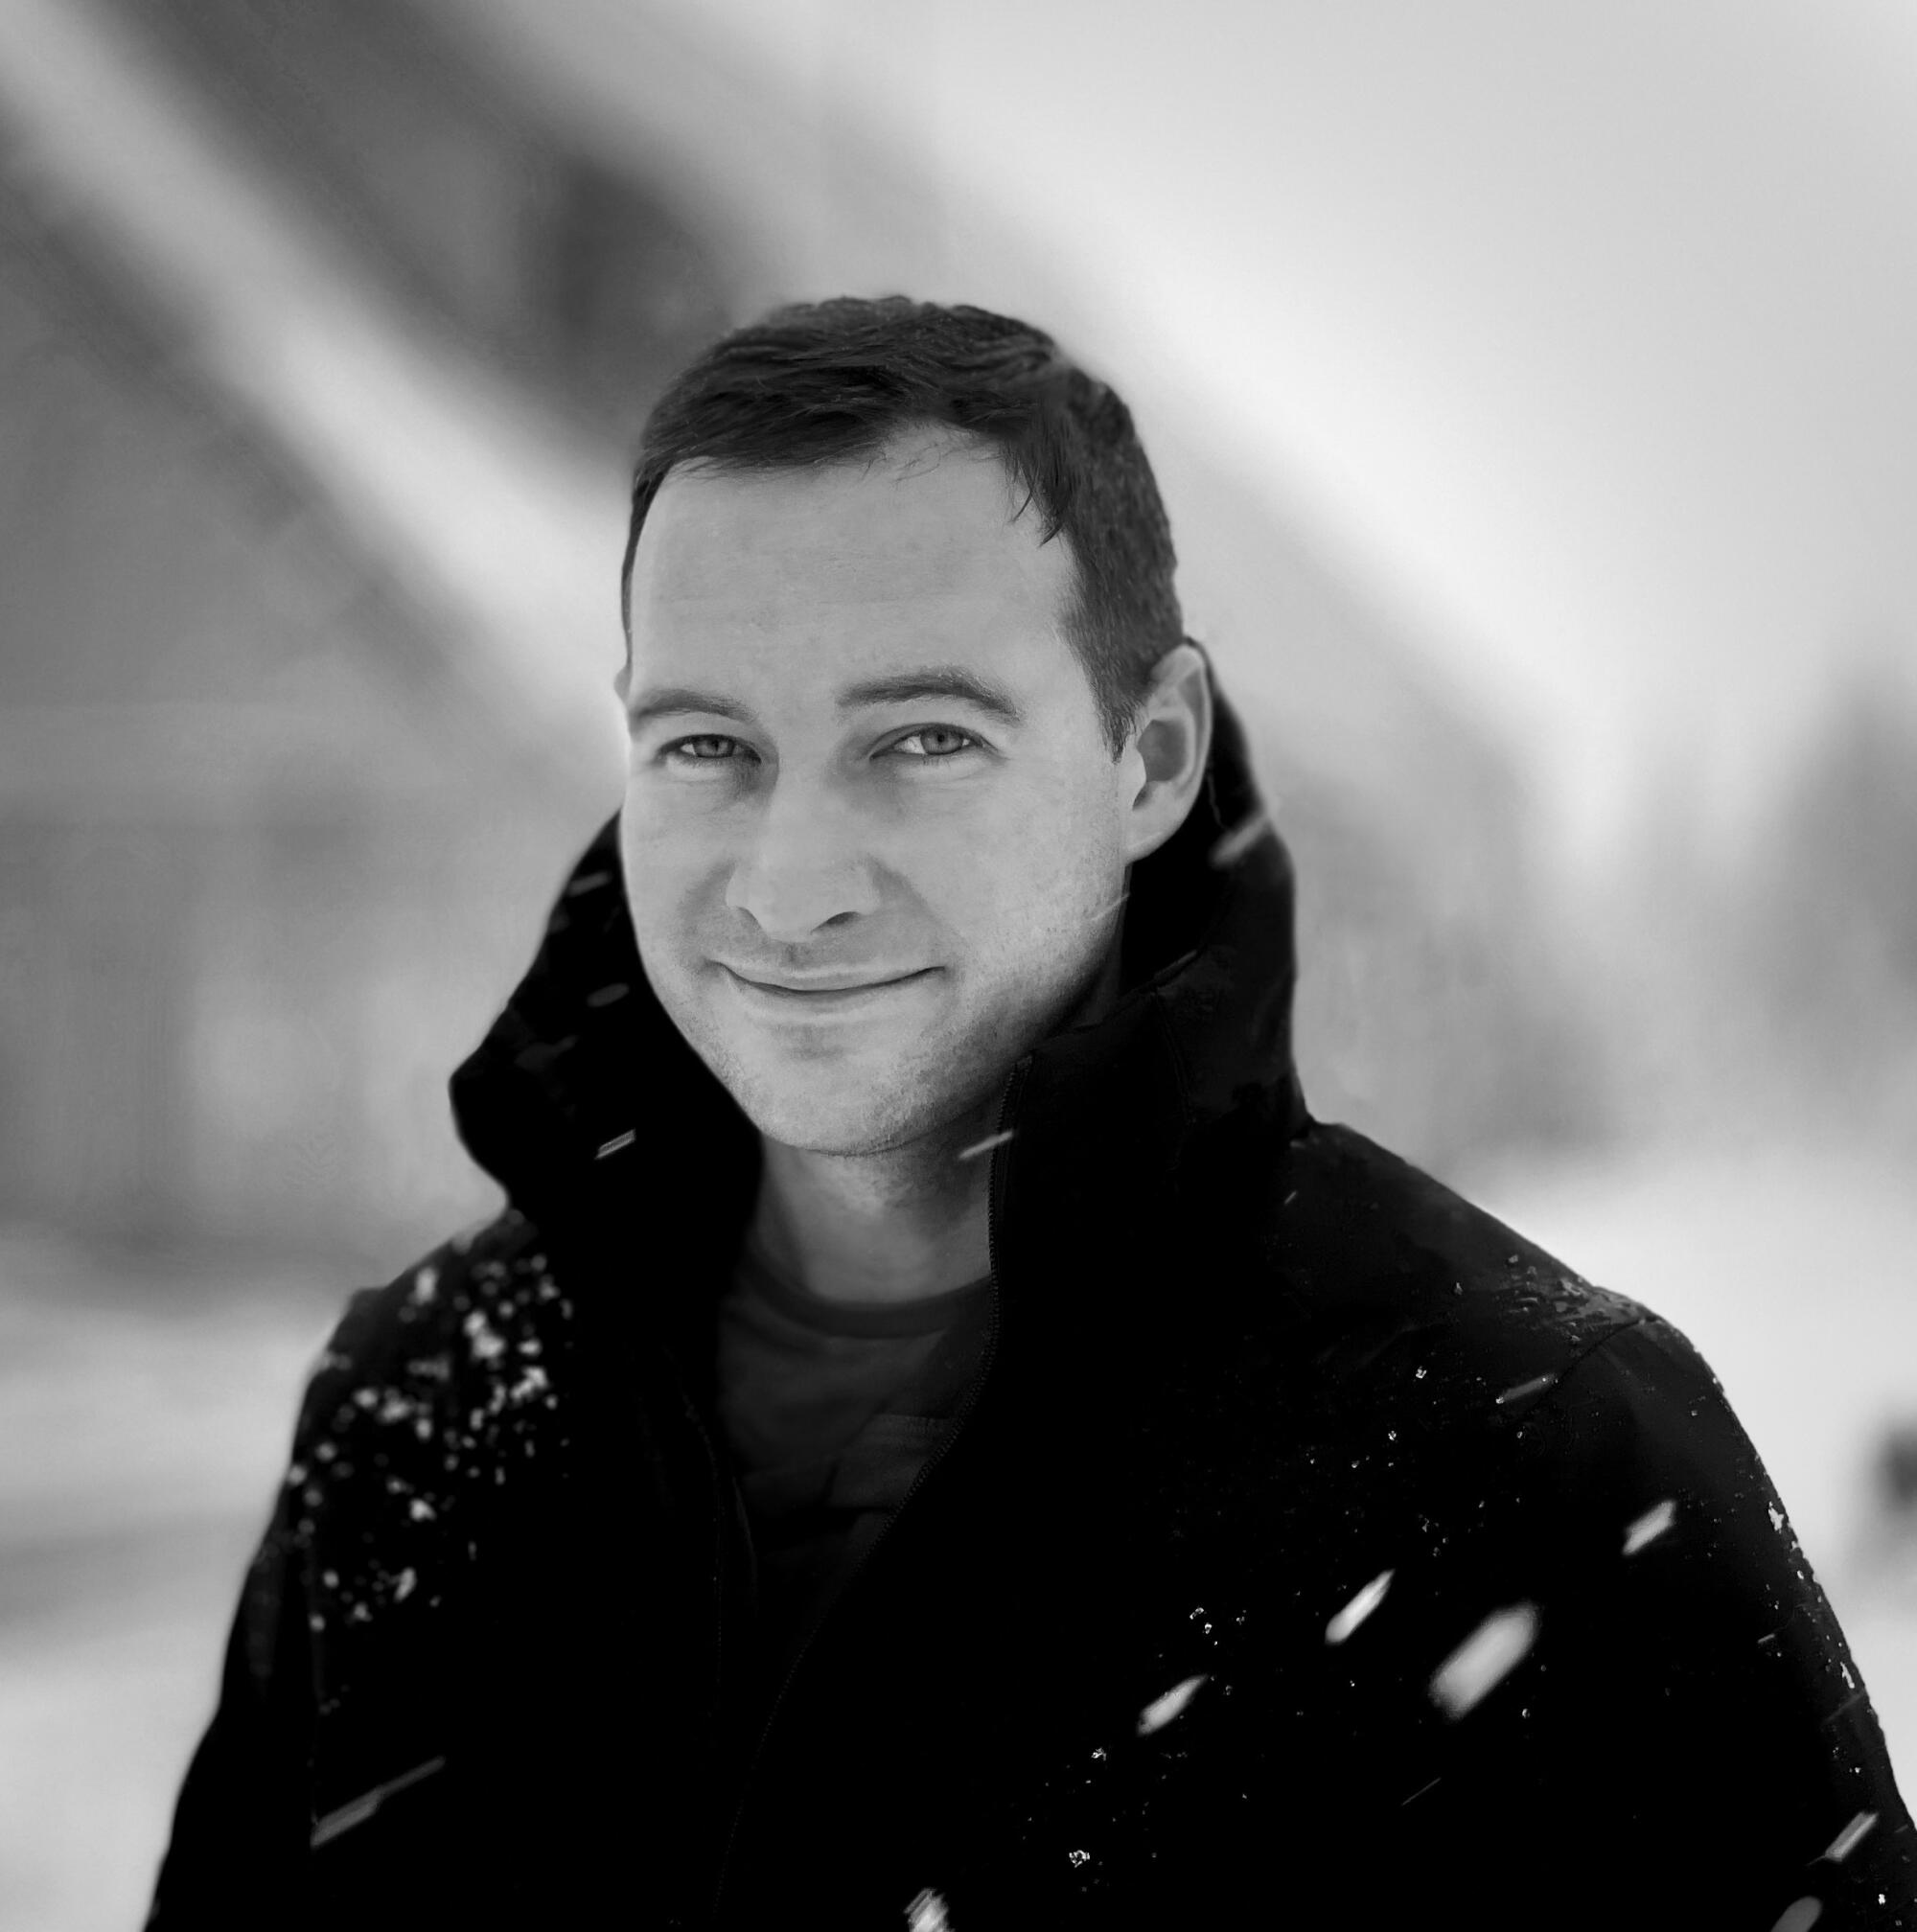 A man in a black coat smiles in an outdoor snowy scene